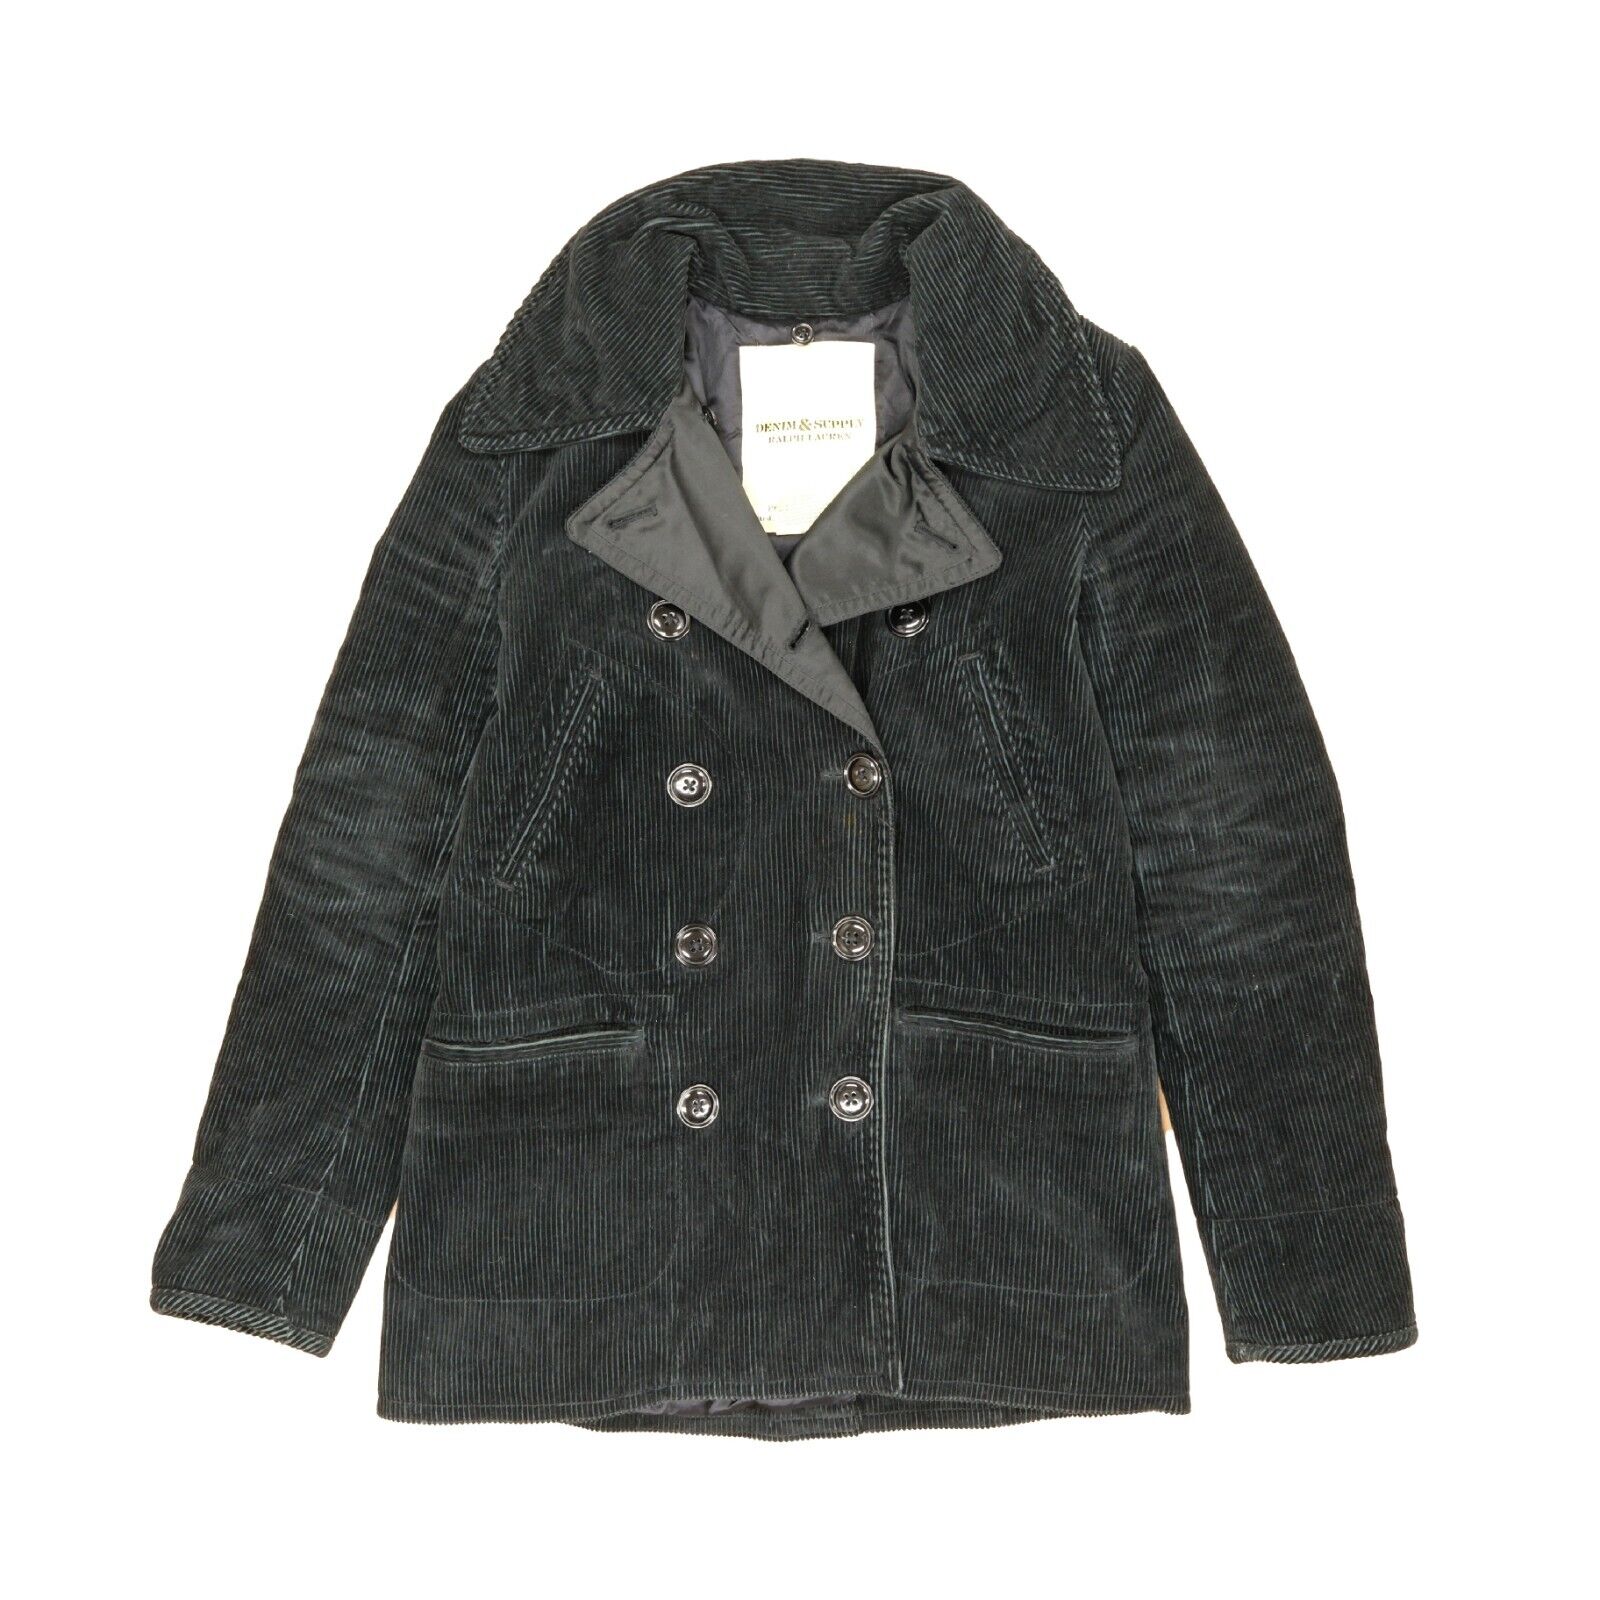 Denim & Supply Ralph Lauren Corduroy Coat Jacket Size Small Double Breasted